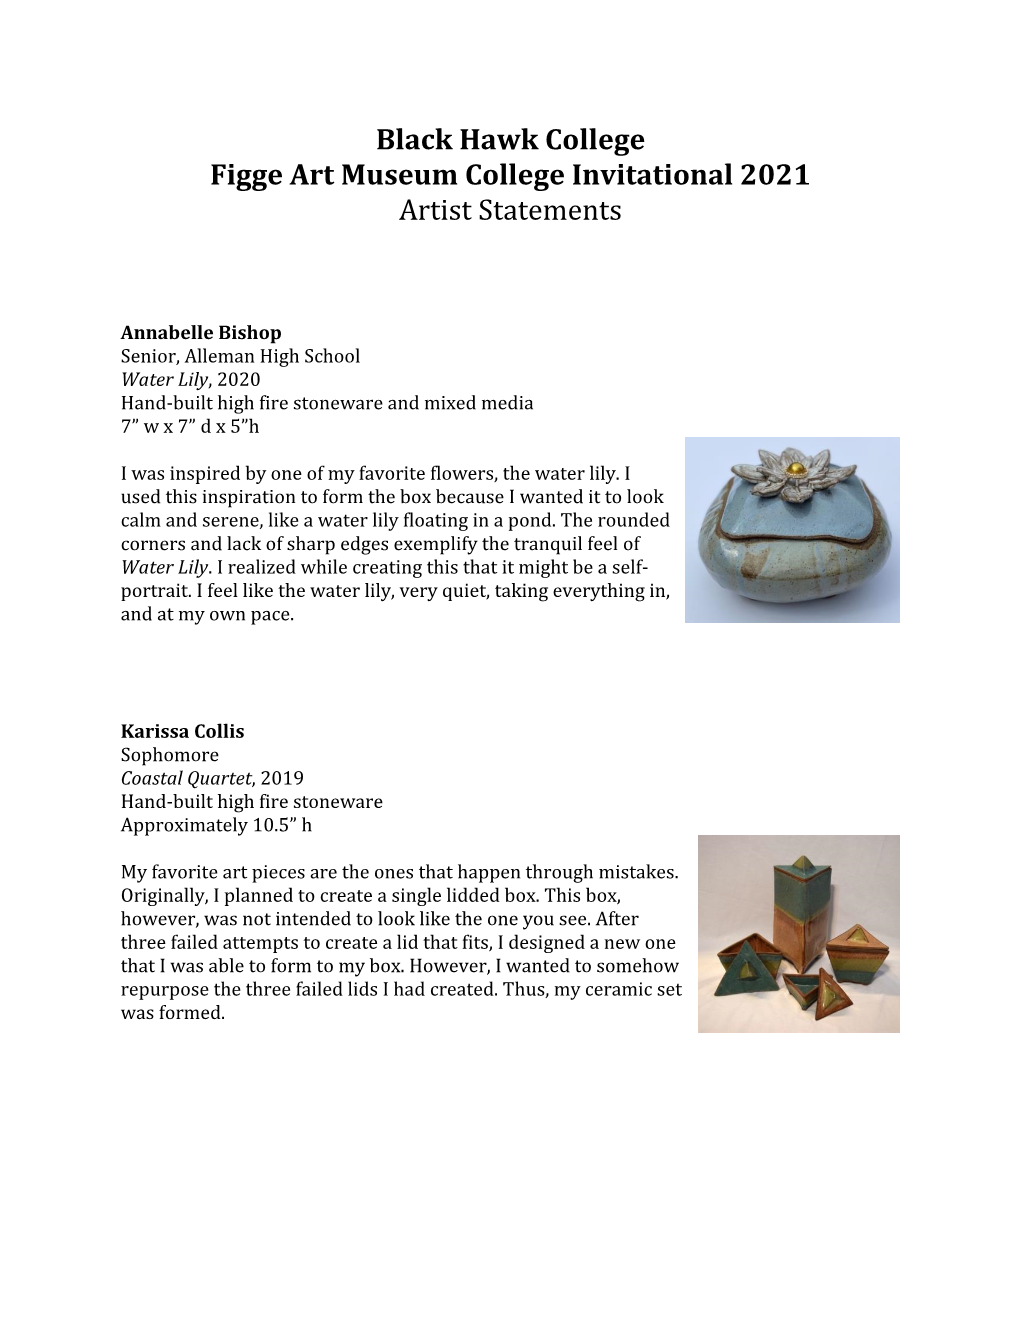 Black Hawk College Figge Art Museum College Invitational 2021 Artist Statements